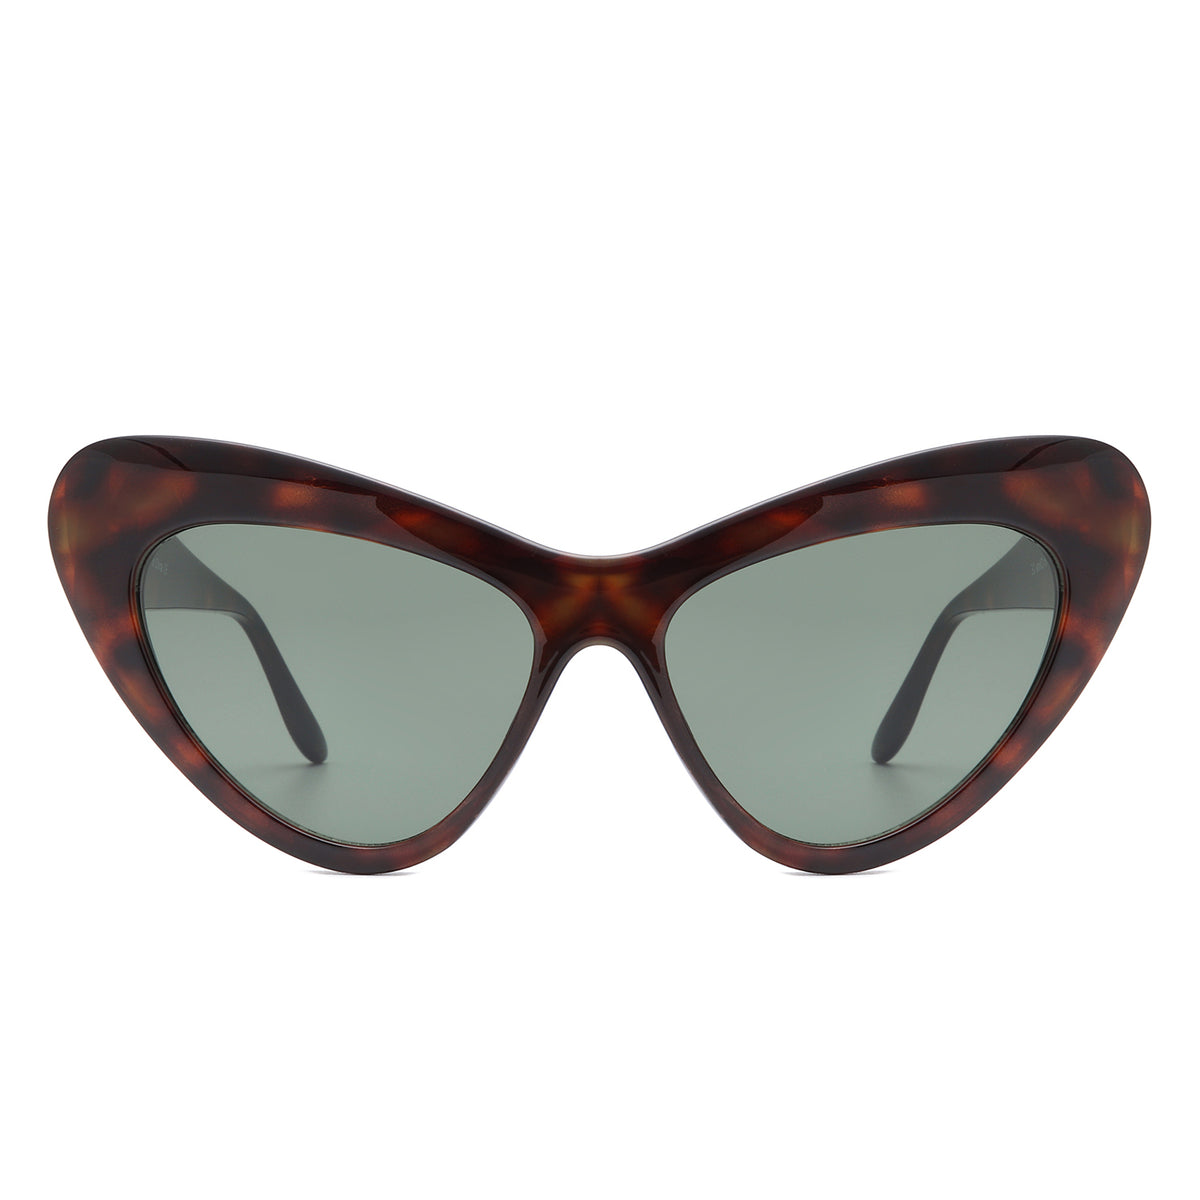 S1237 - Women High Pointed Cat Eye Fashion Wholesale Sunglasses